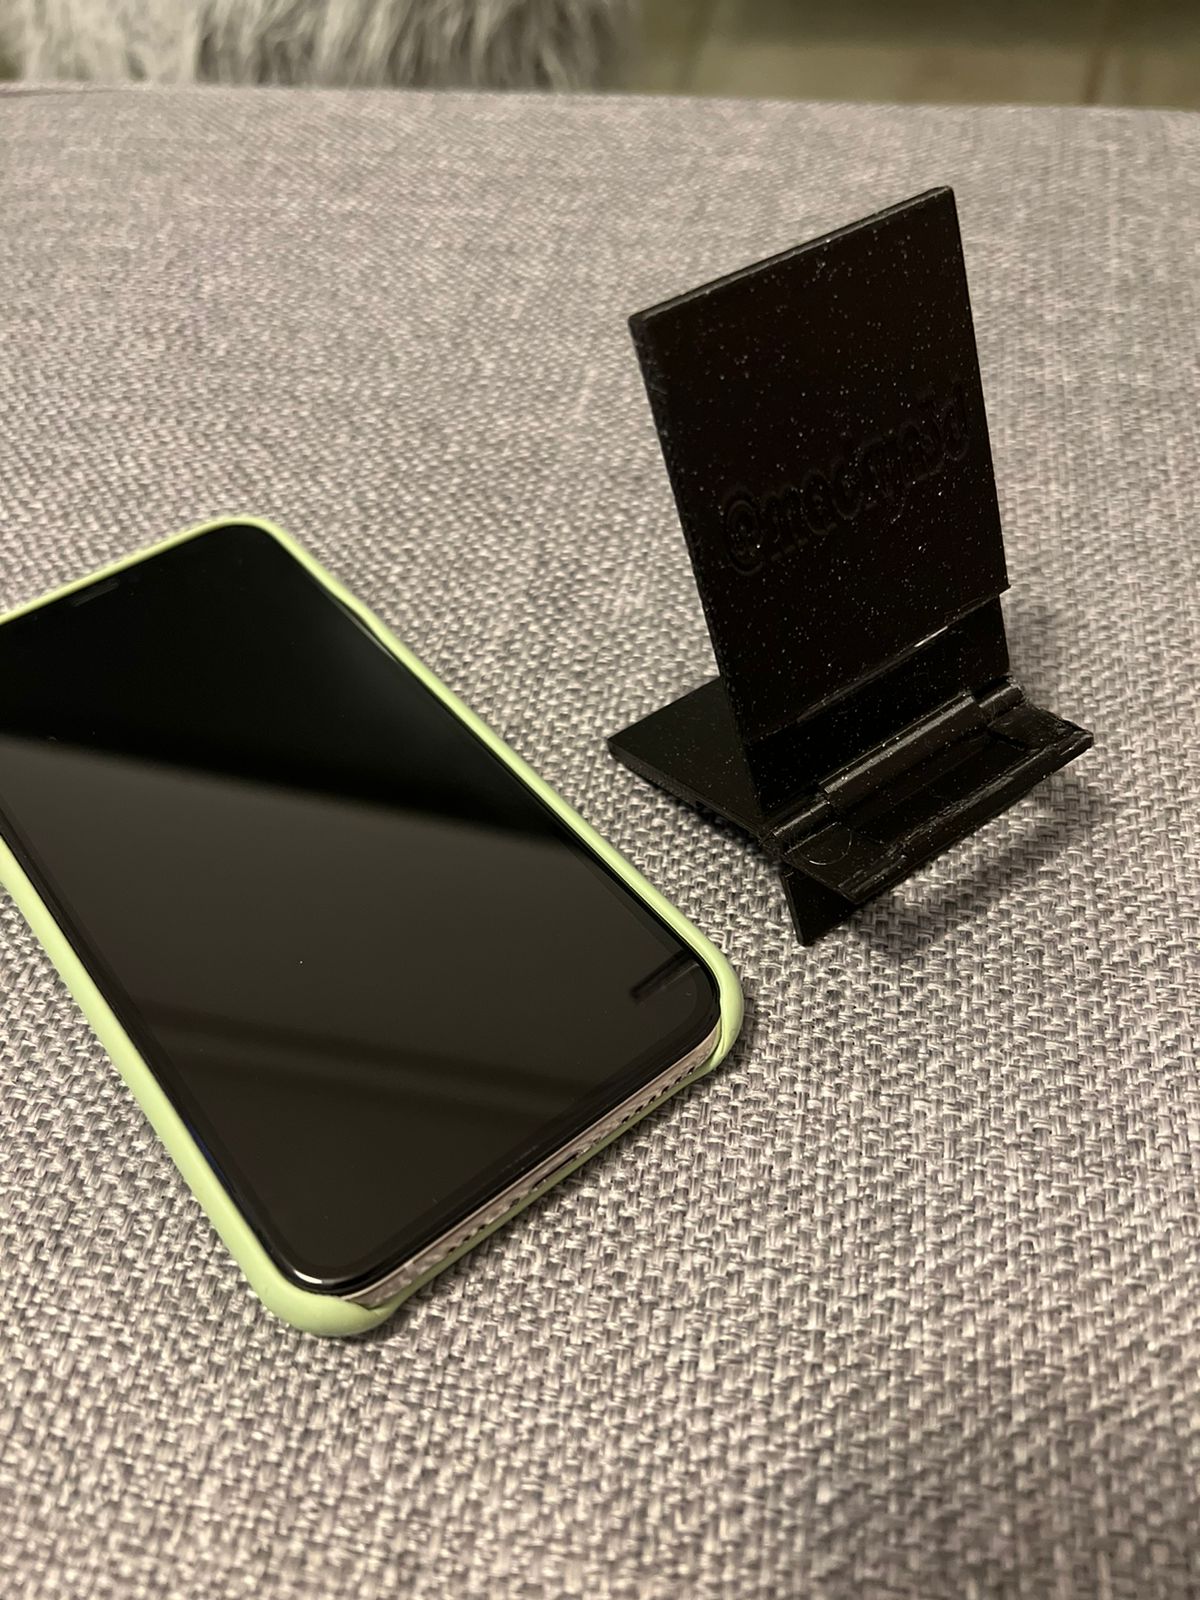 Pocket Smartphone Support v1.0 @madryn3d @madryn3d